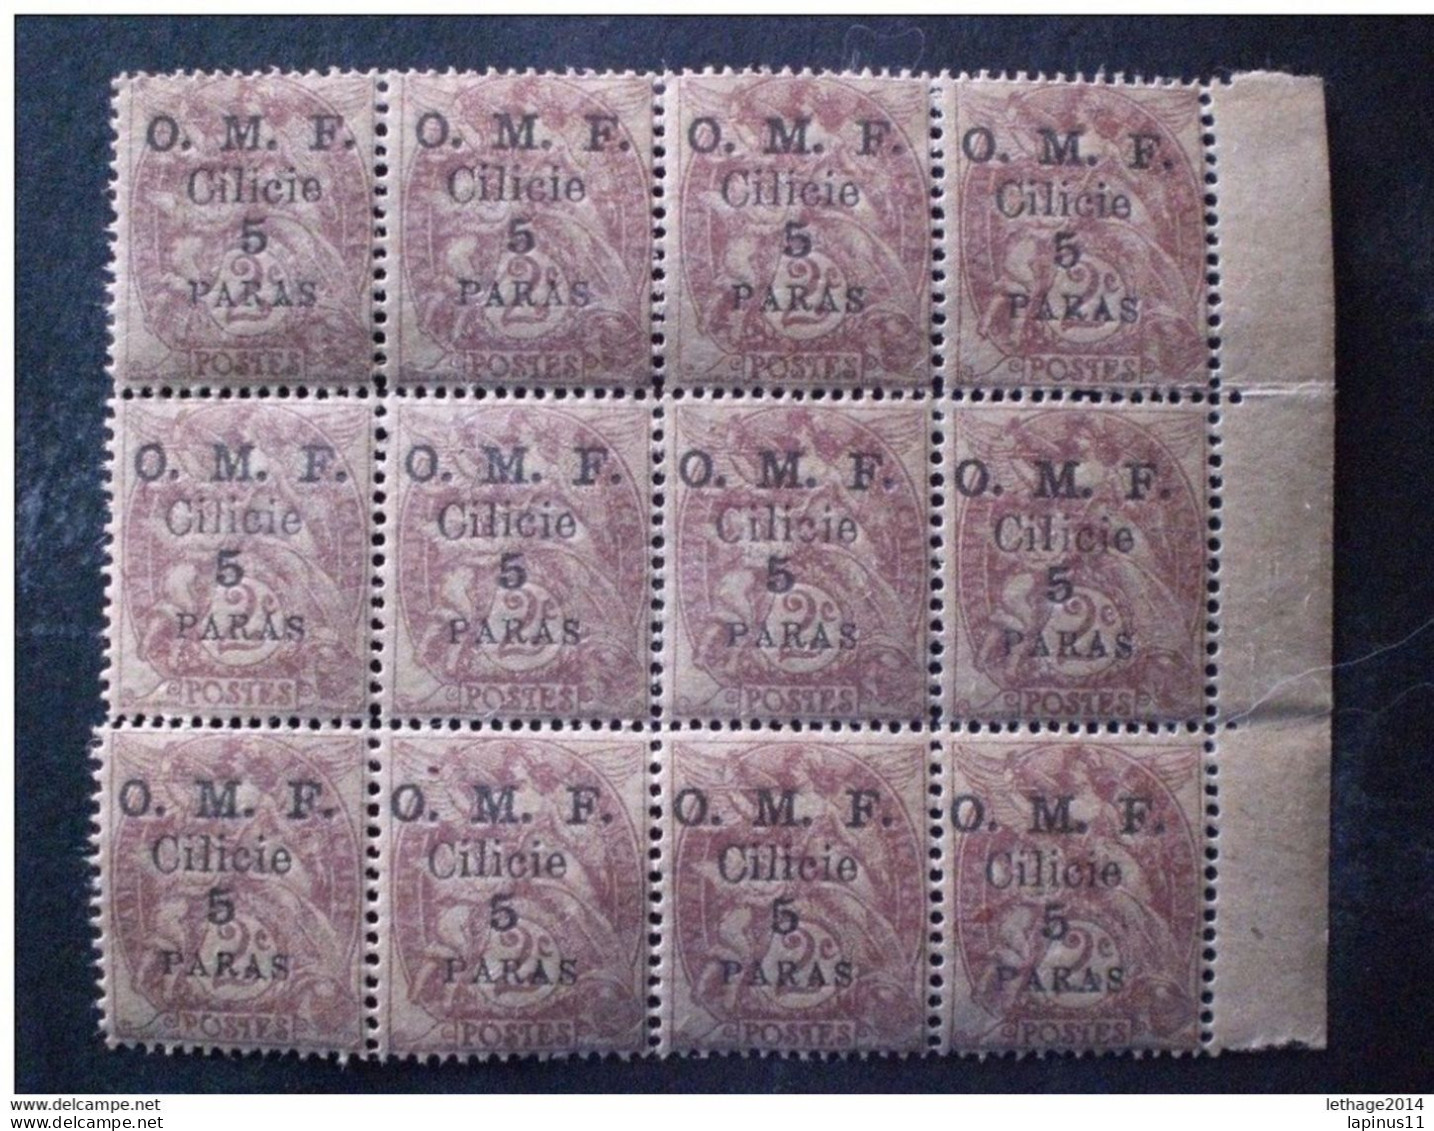 Ottoman Cilicia Rare Stamps O.M.F MNH 12 Stamps 2 Centimes Over Print 5 Paras ERROR!! $$$$ Mnh - Ongebruikt